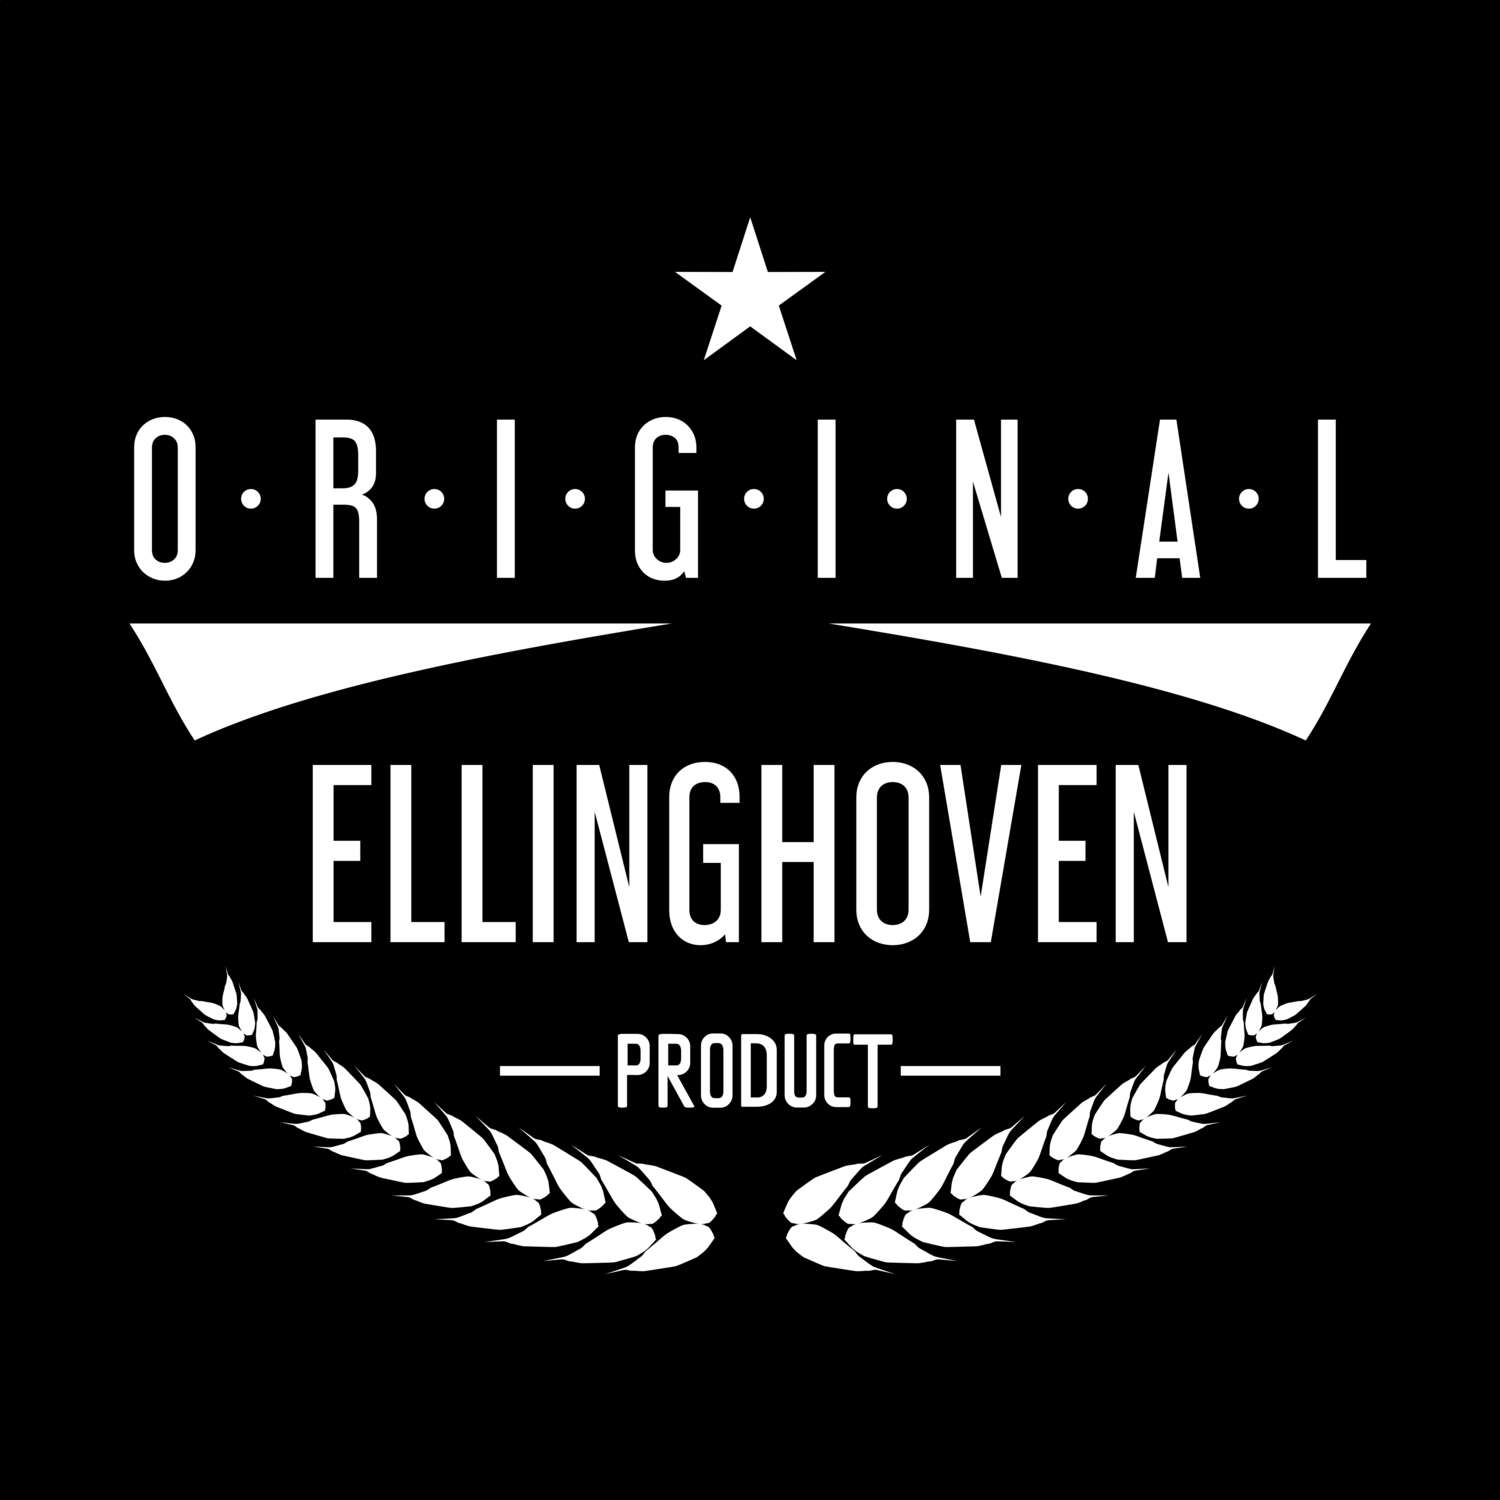 Ellinghoven T-Shirt »Original Product«